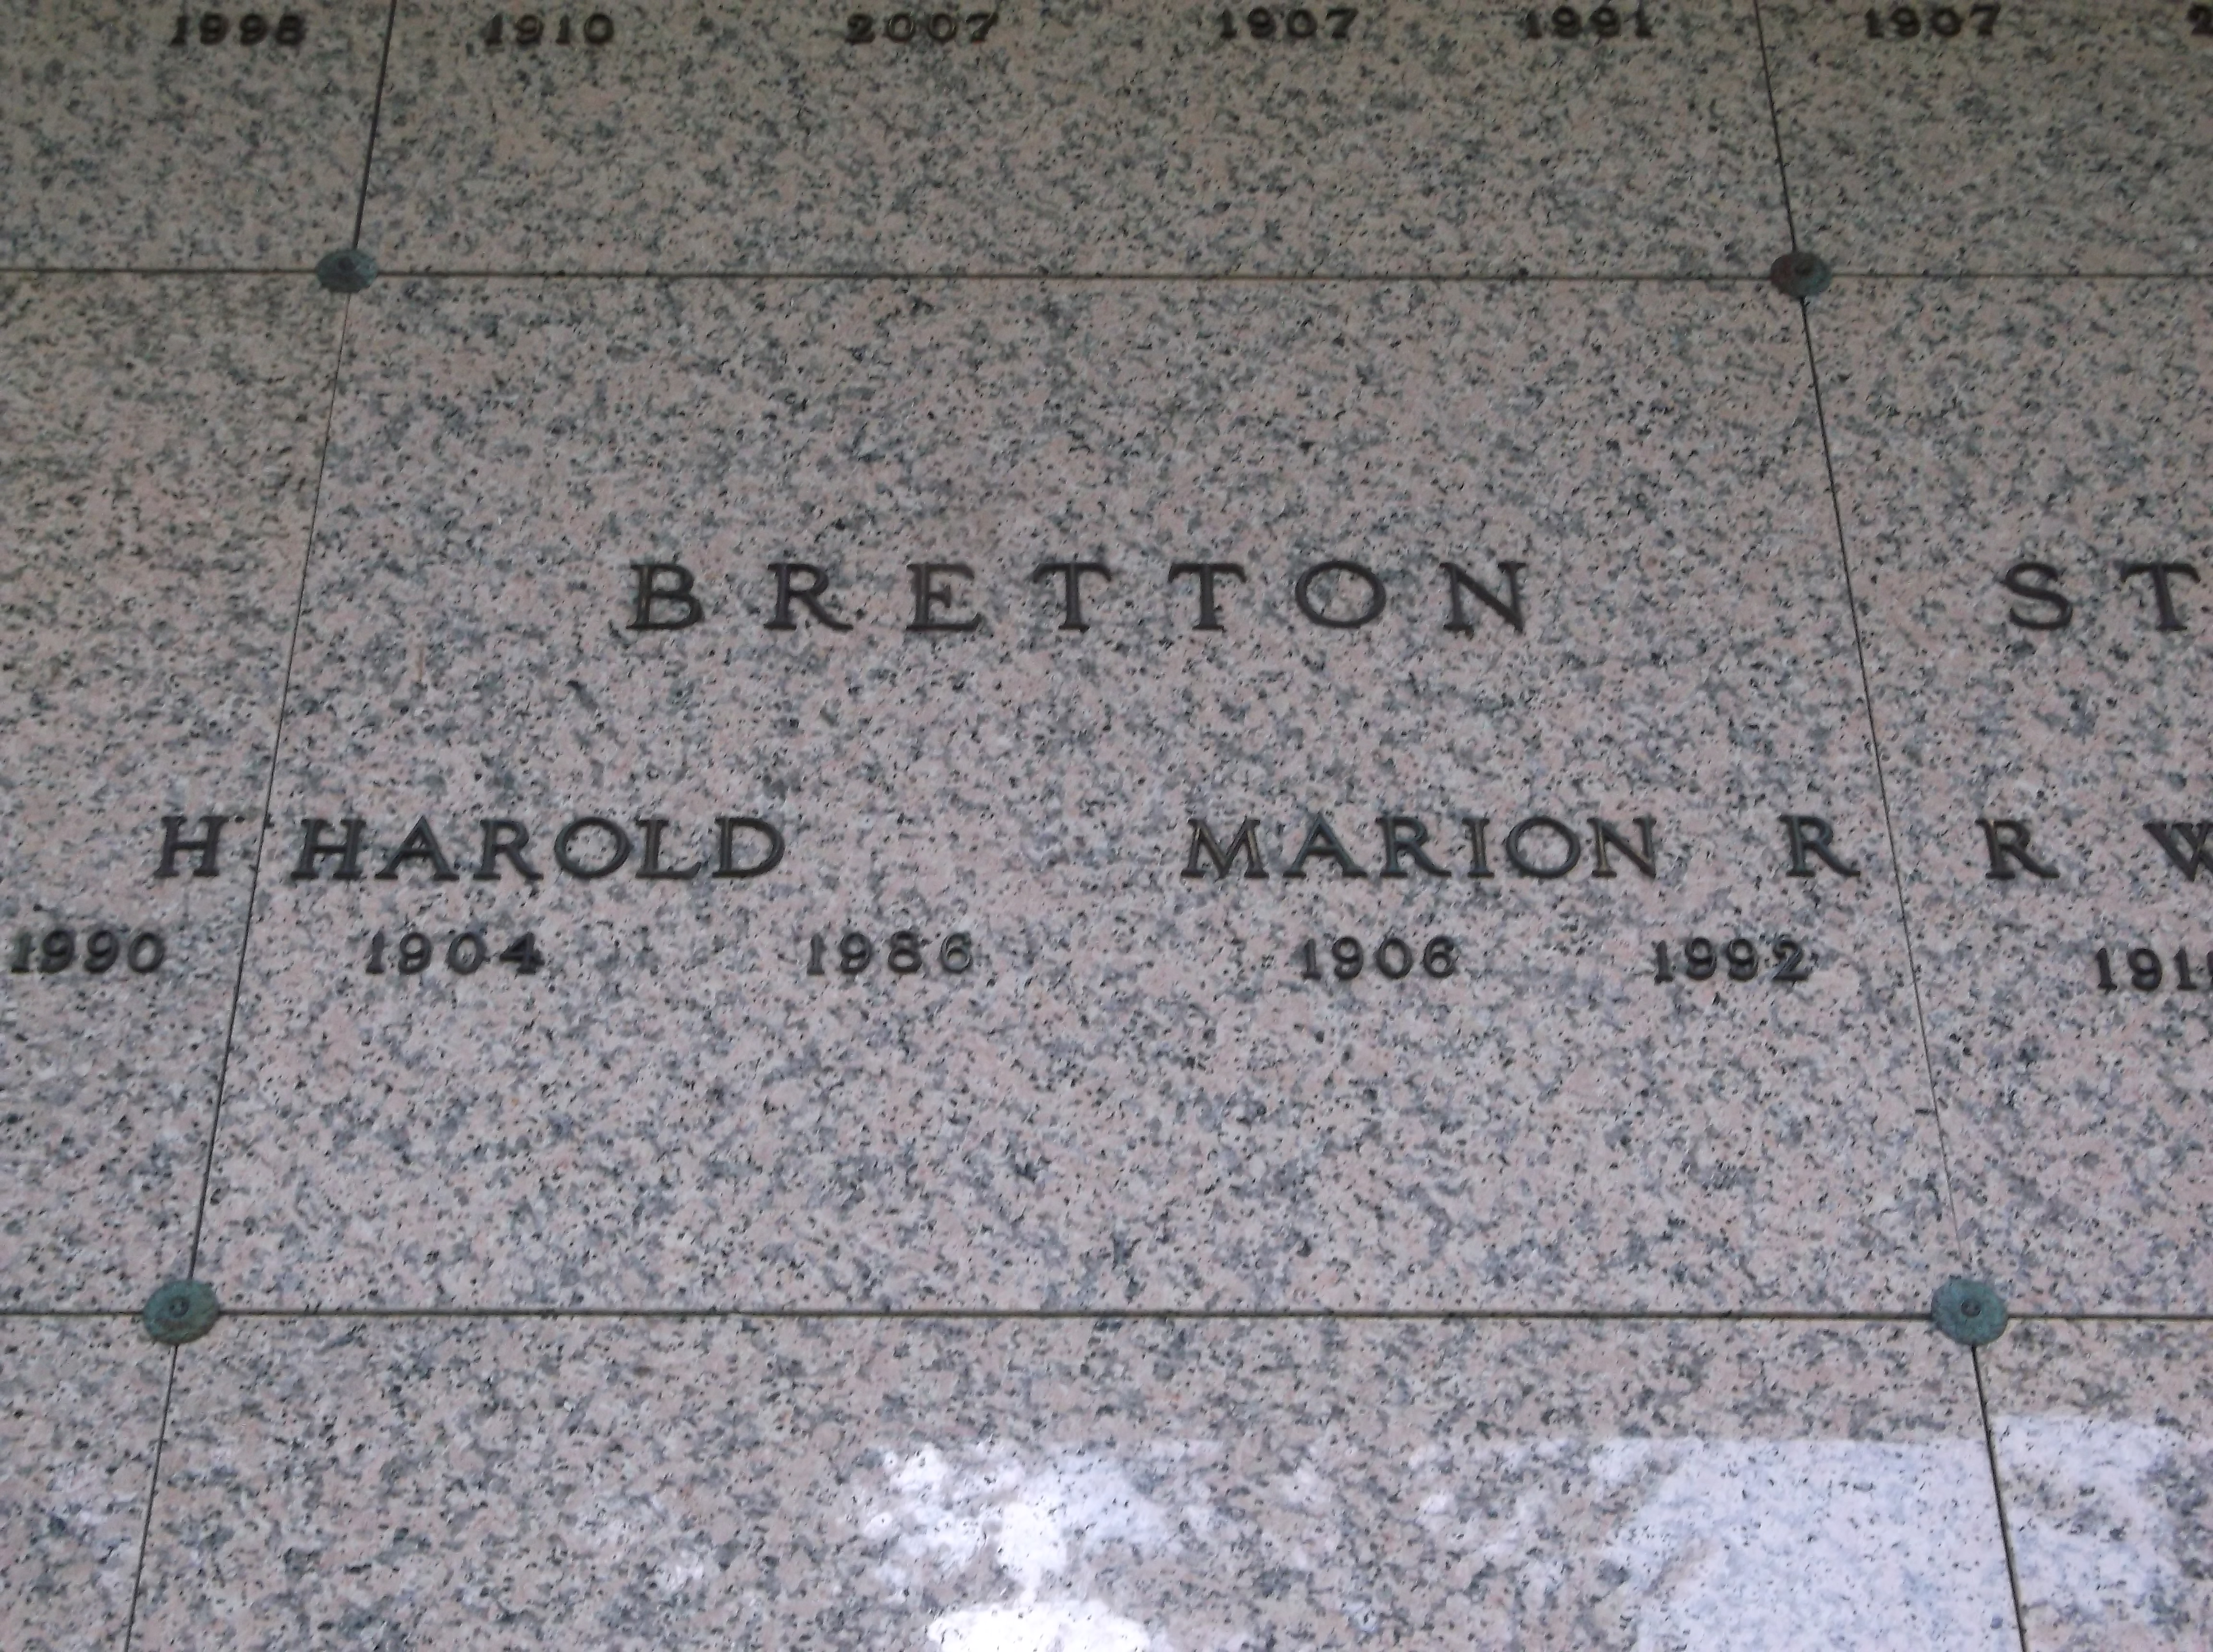 Harold Bretton